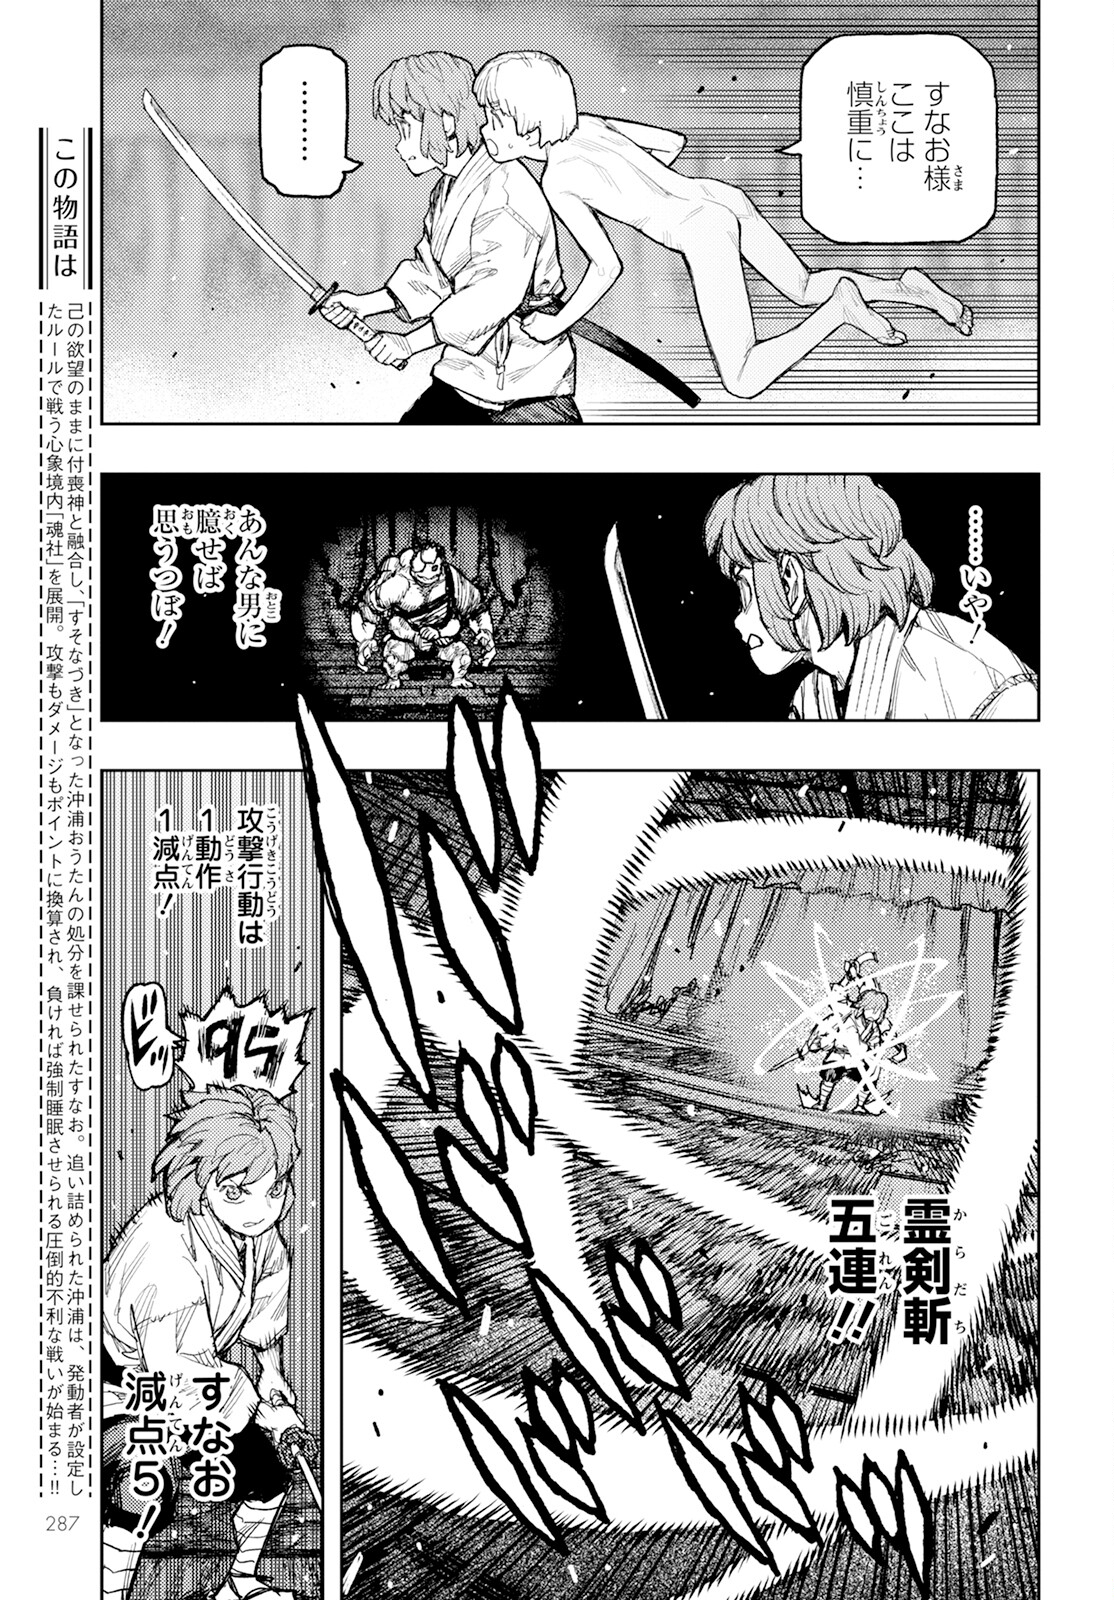 Tsugumomo - Chapter 164 - Page 3